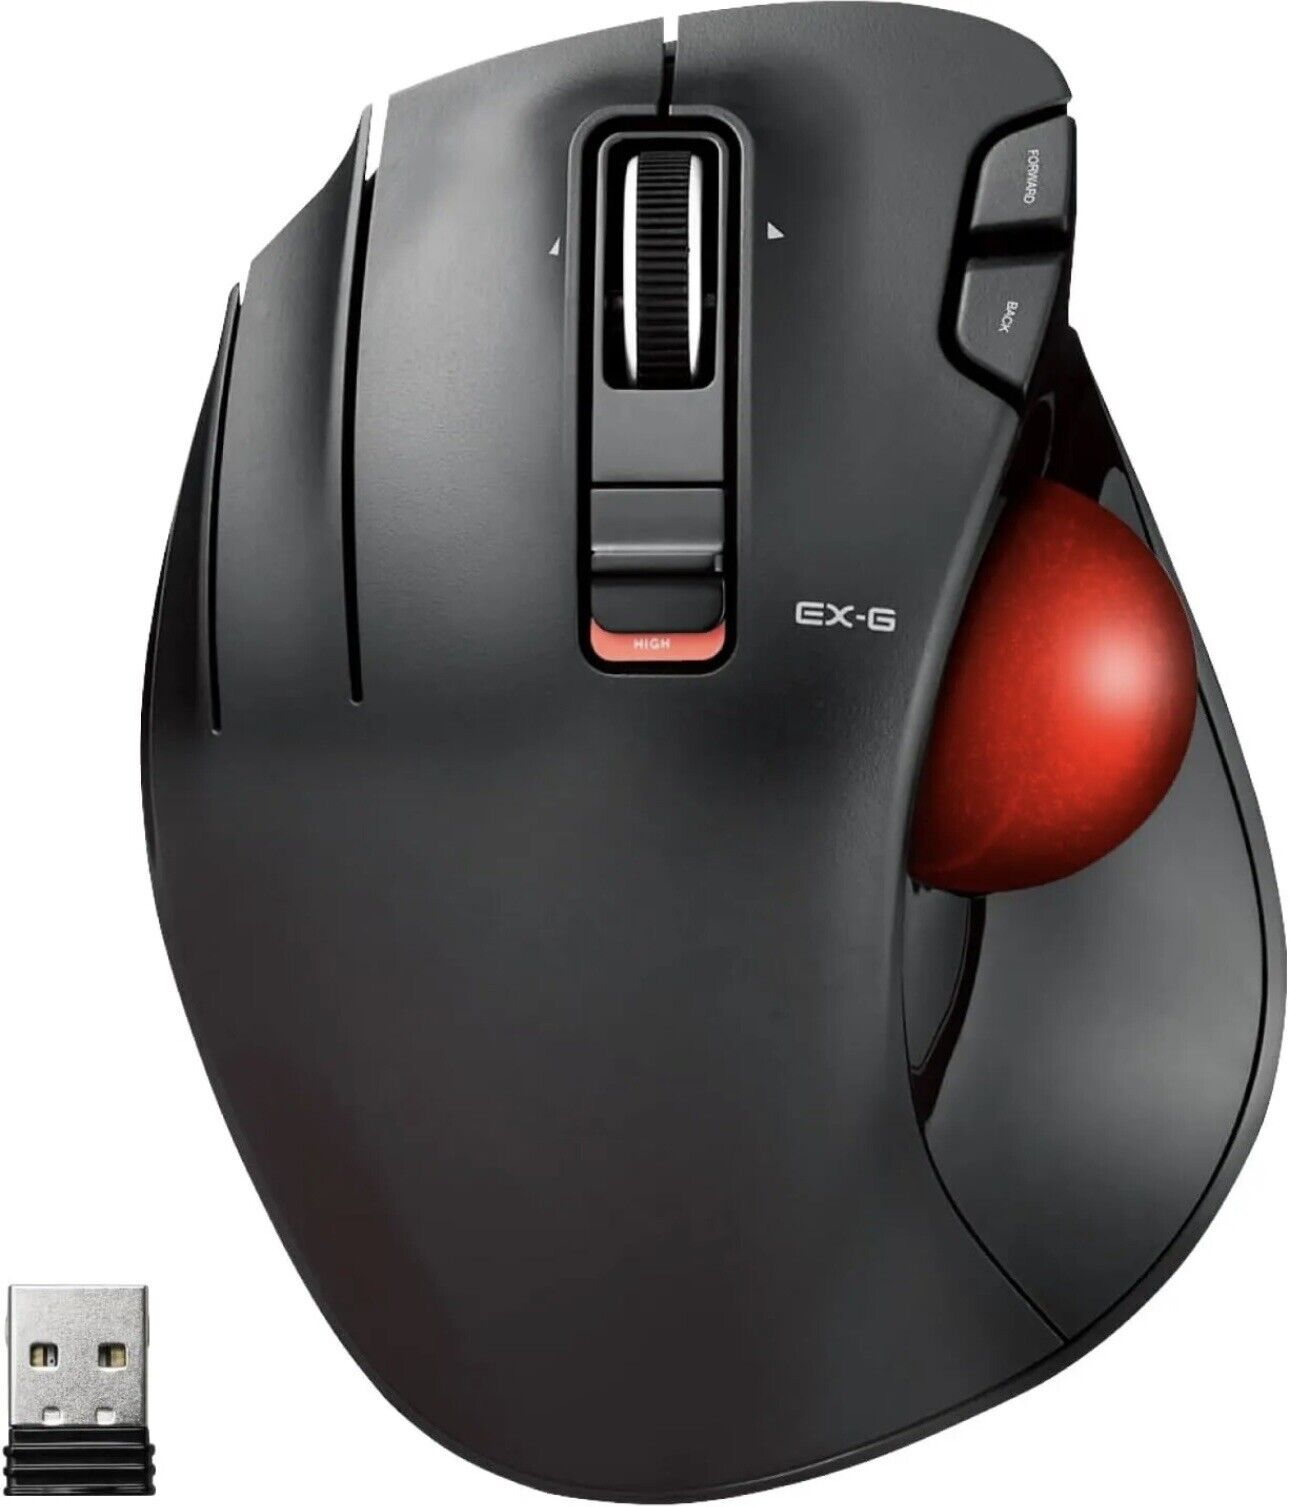 Elecom EX-G Left-handed Wireless track ball mouse 2.4GHz 6 Button M-XT4DRBK